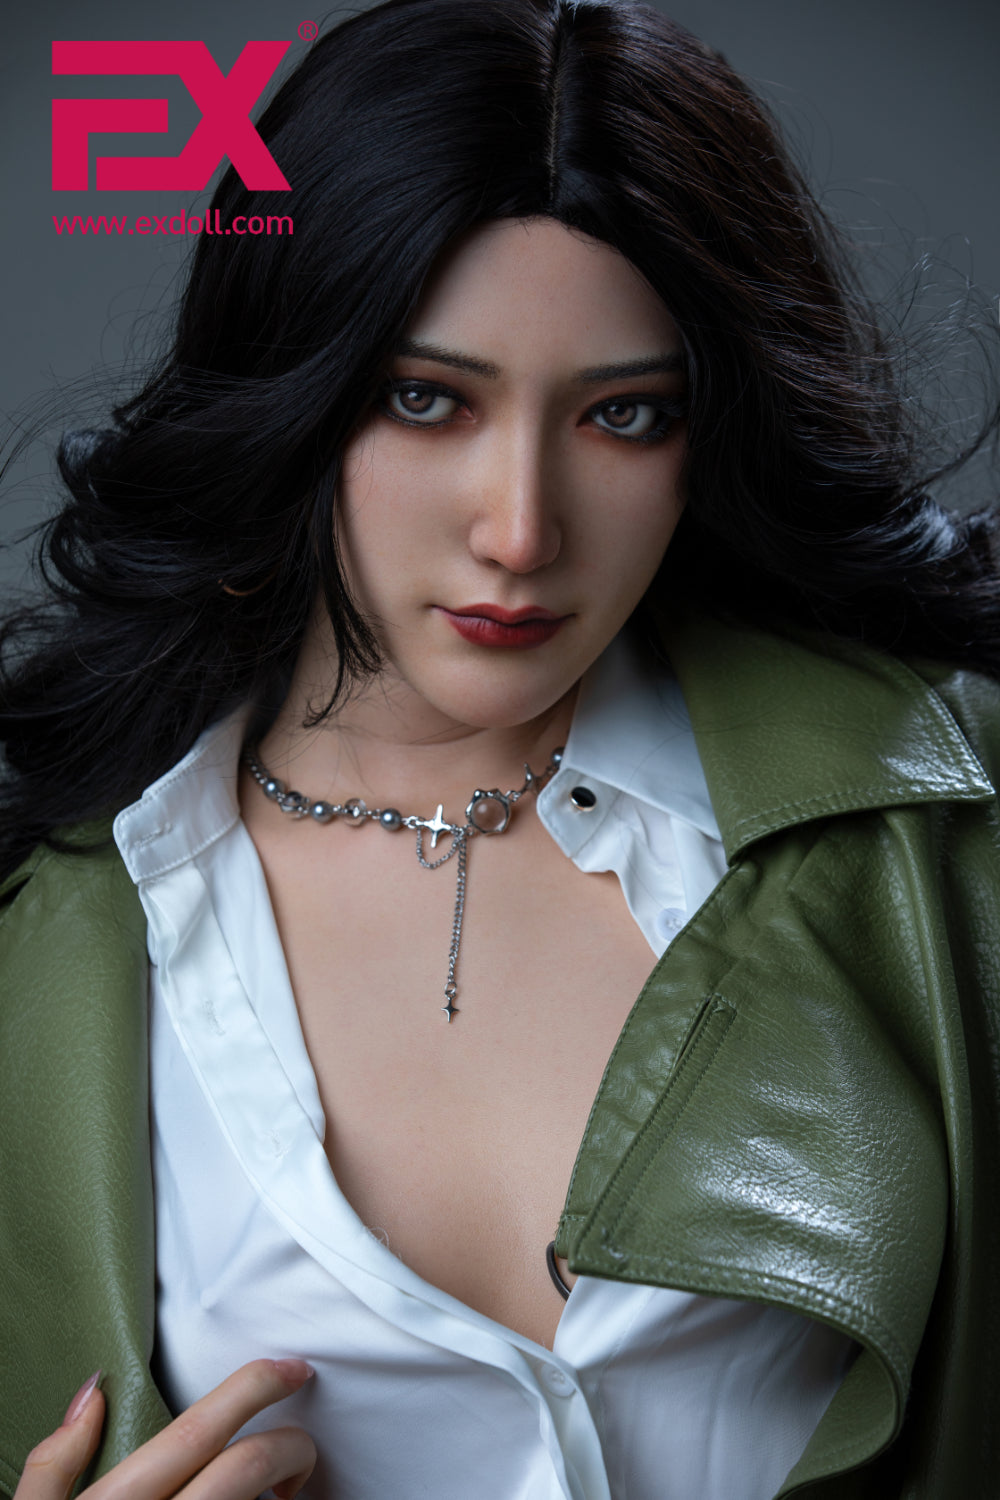 EX Doll Clone Series 172 cm Silicone - Jia Lan | Sex Dolls SG